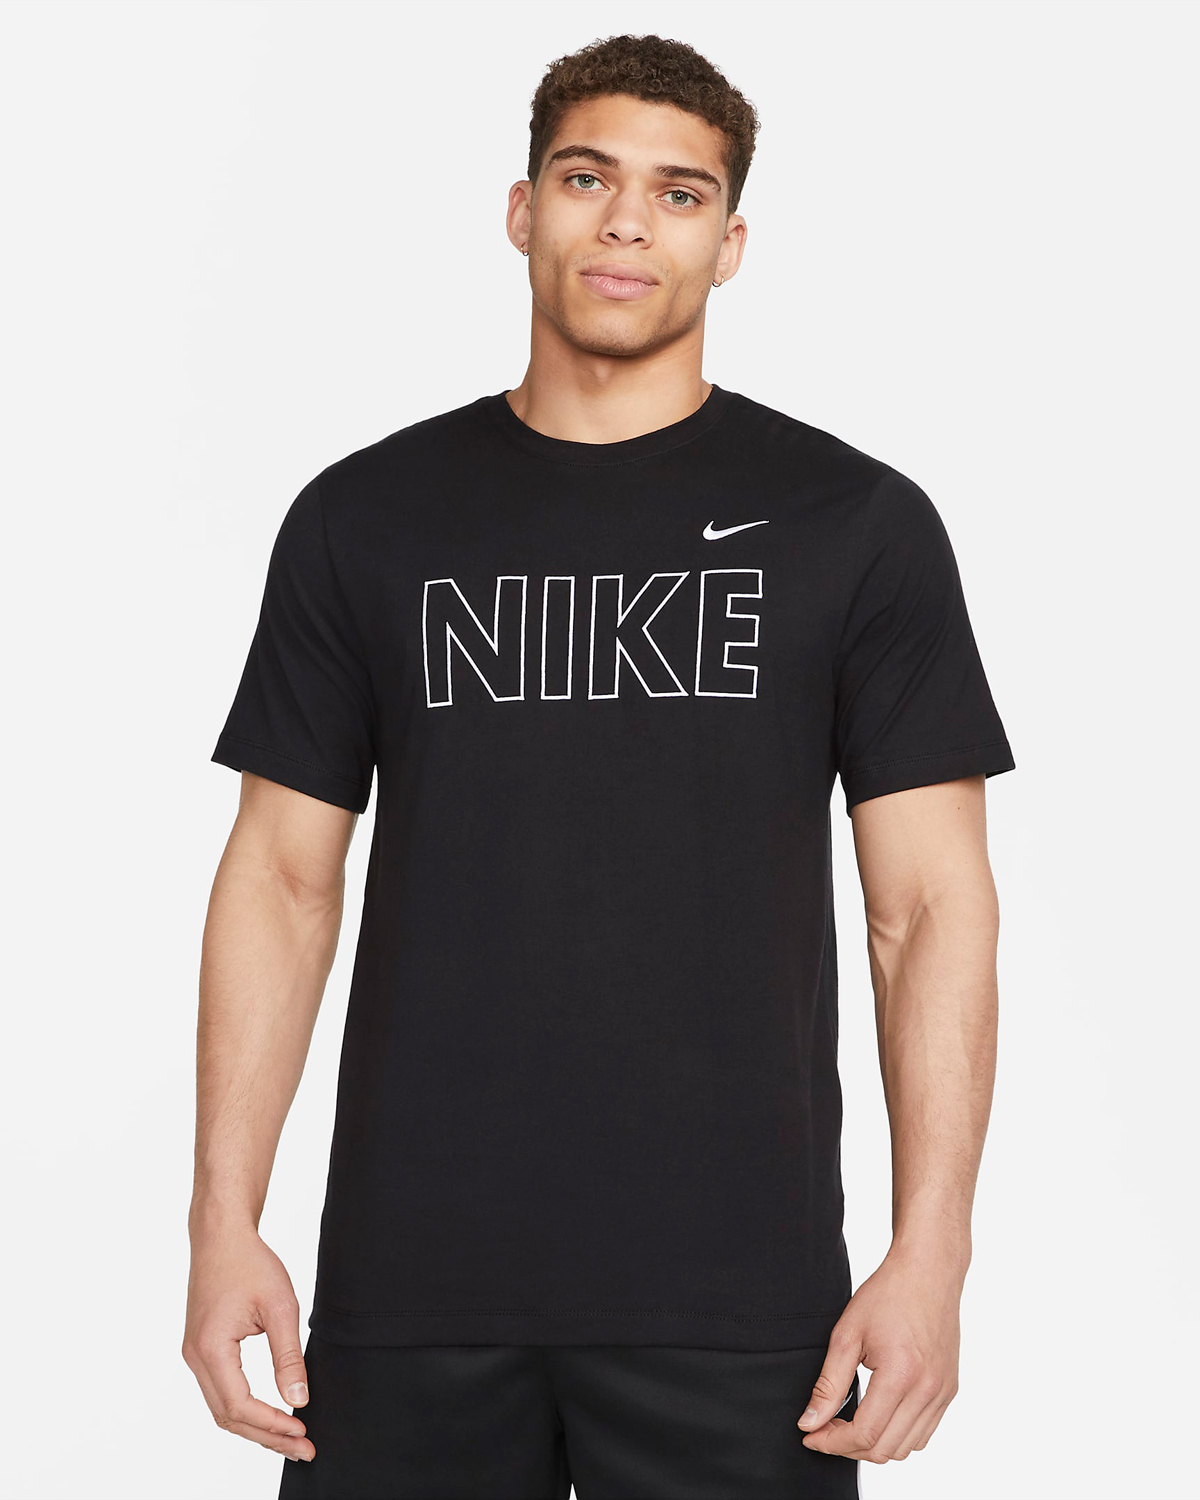 Nike-Sportswear-T-Shirt-Black-White